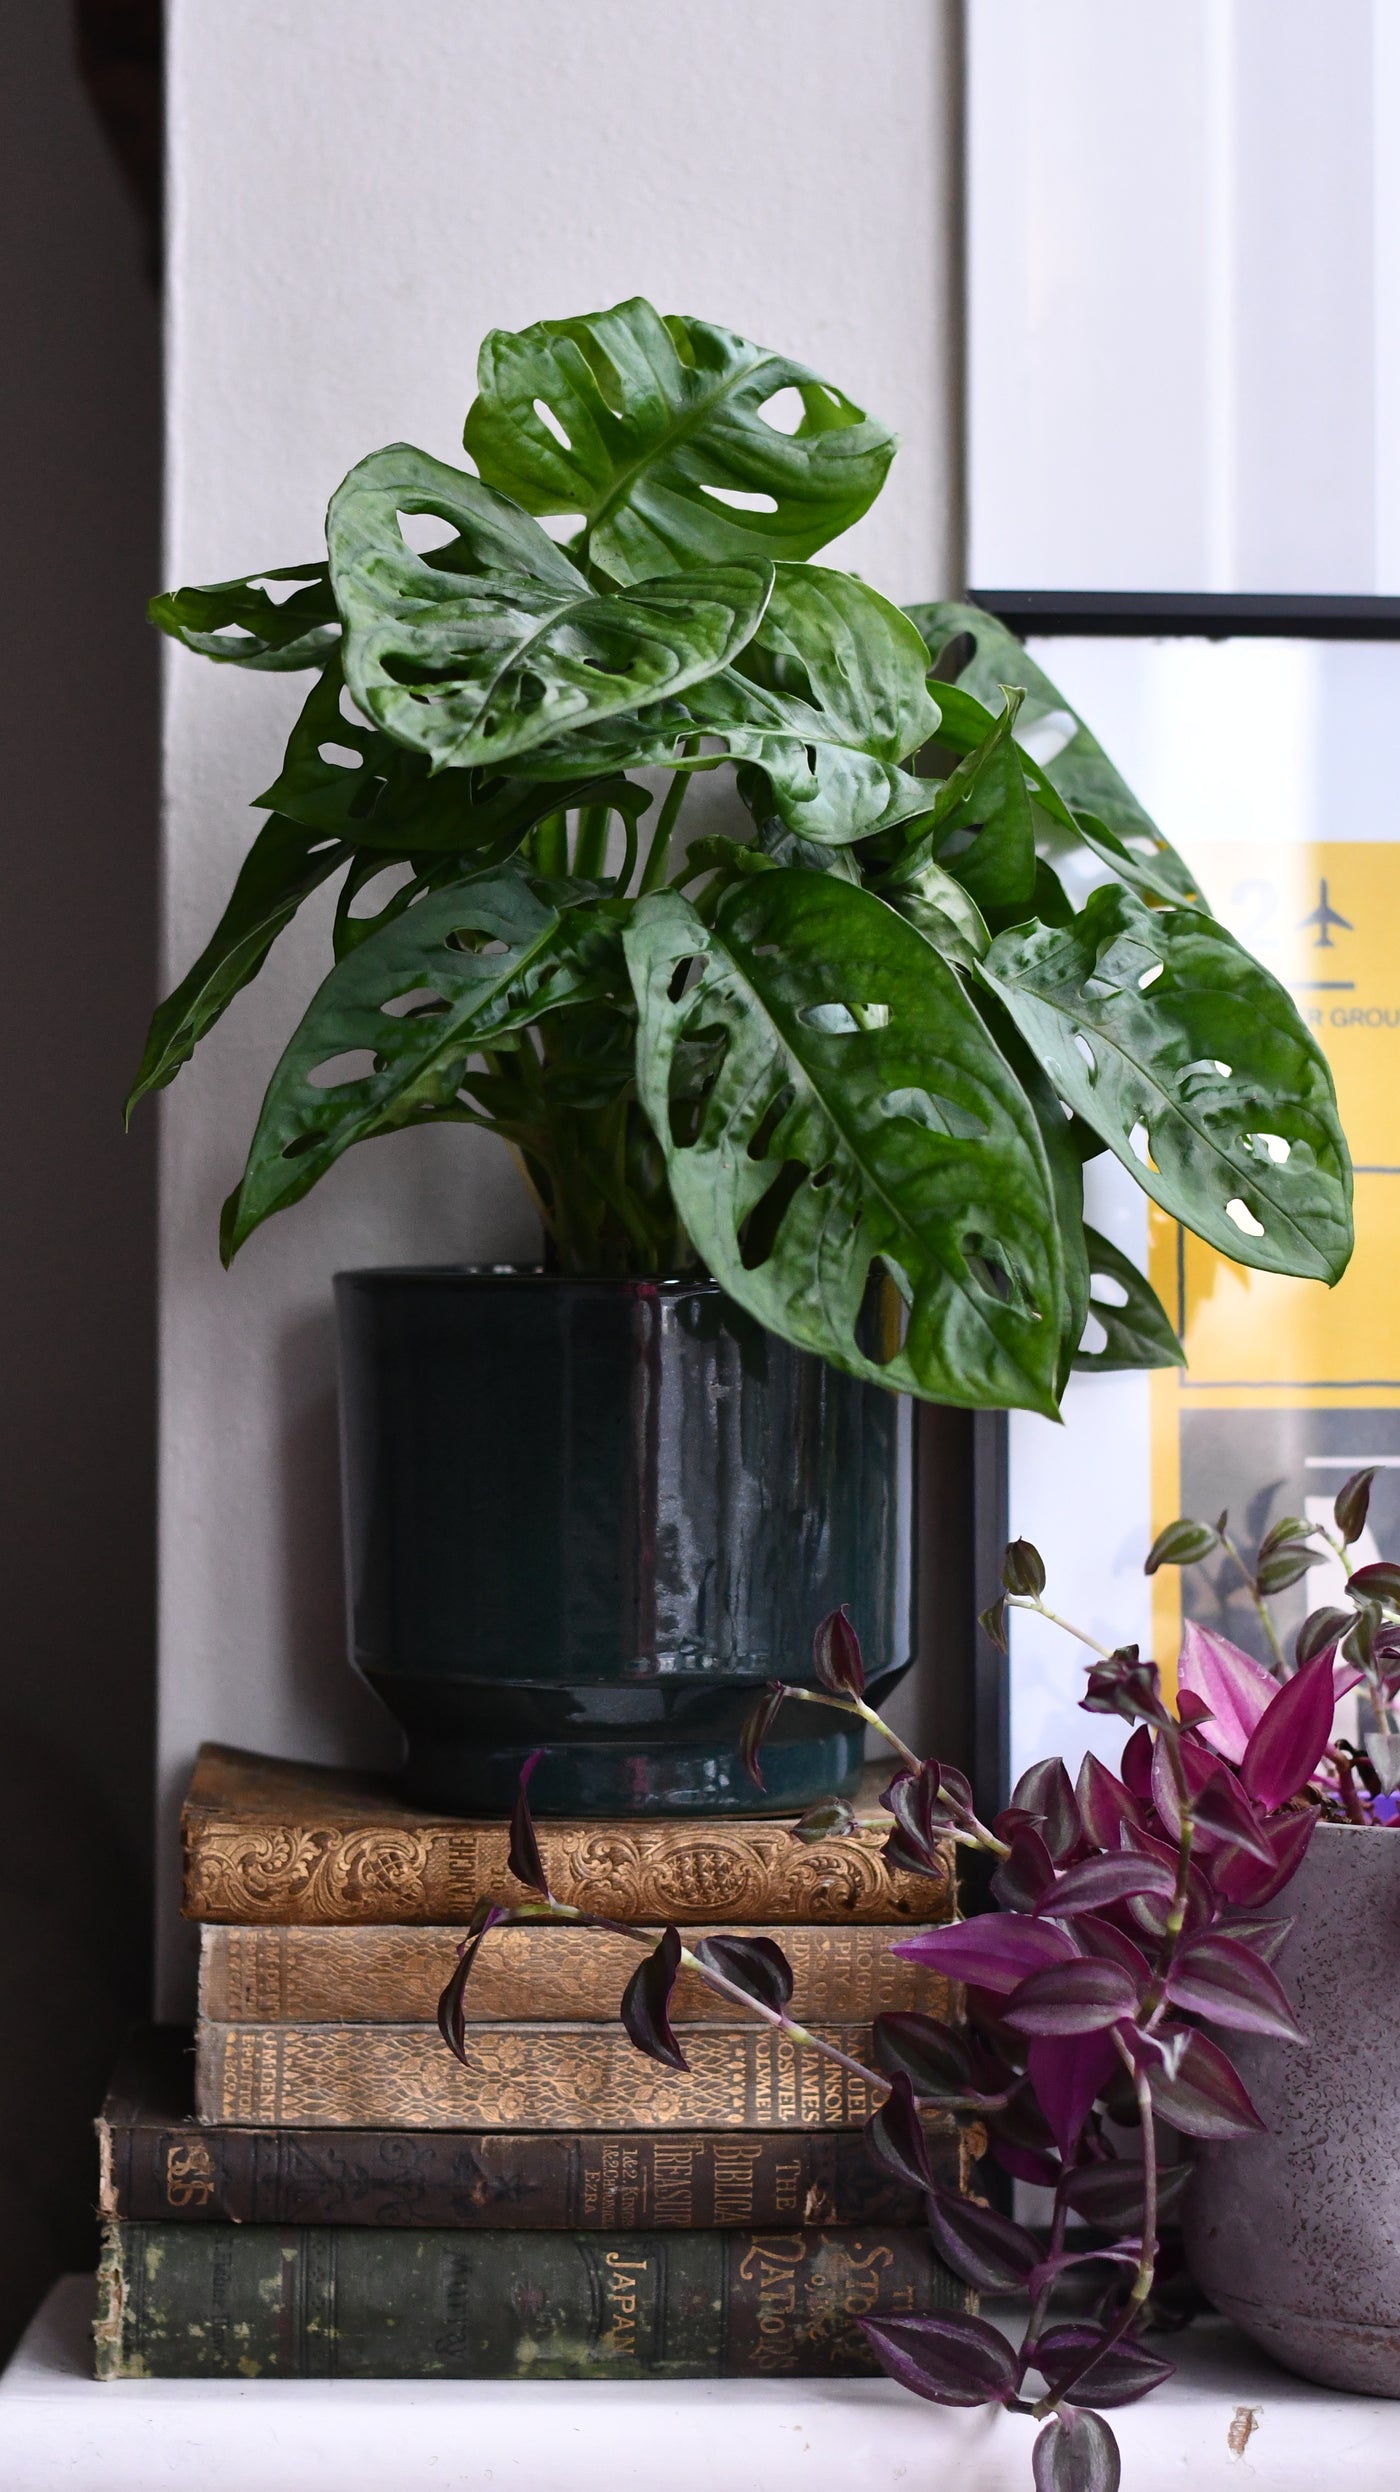 Forest Green premium Glaze planter (14cm indoor plant pot)